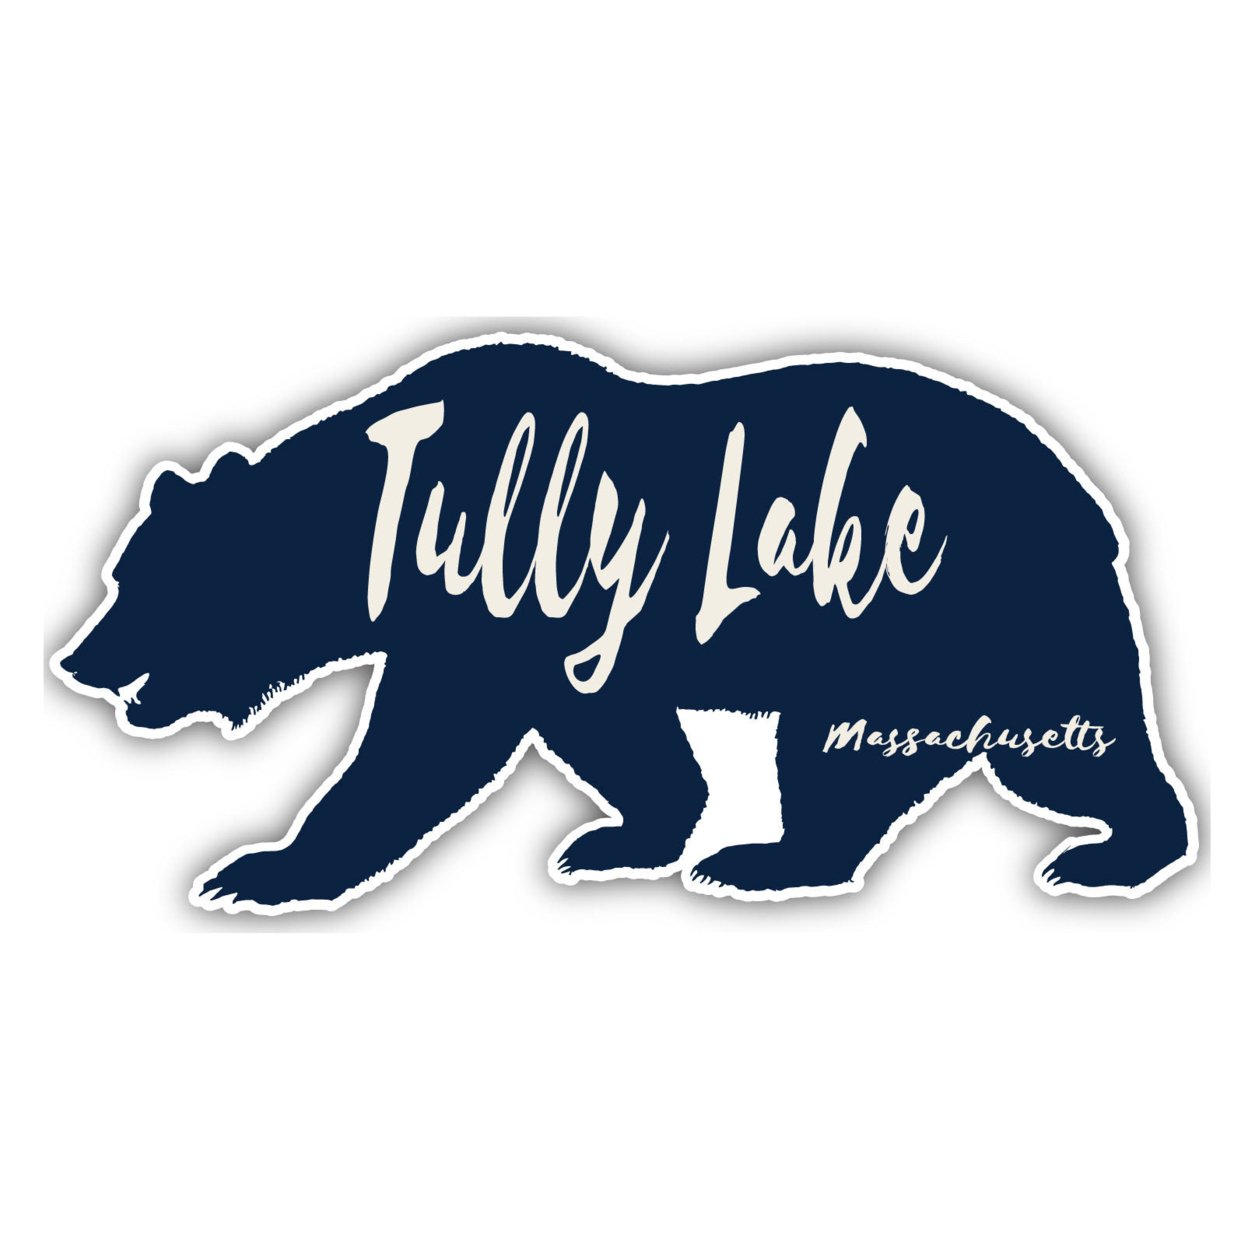 Tully Lake Massachusetts Souvenir Decorative Stickers (Choose Theme And Size) - Single Unit, 4-Inch, Bear